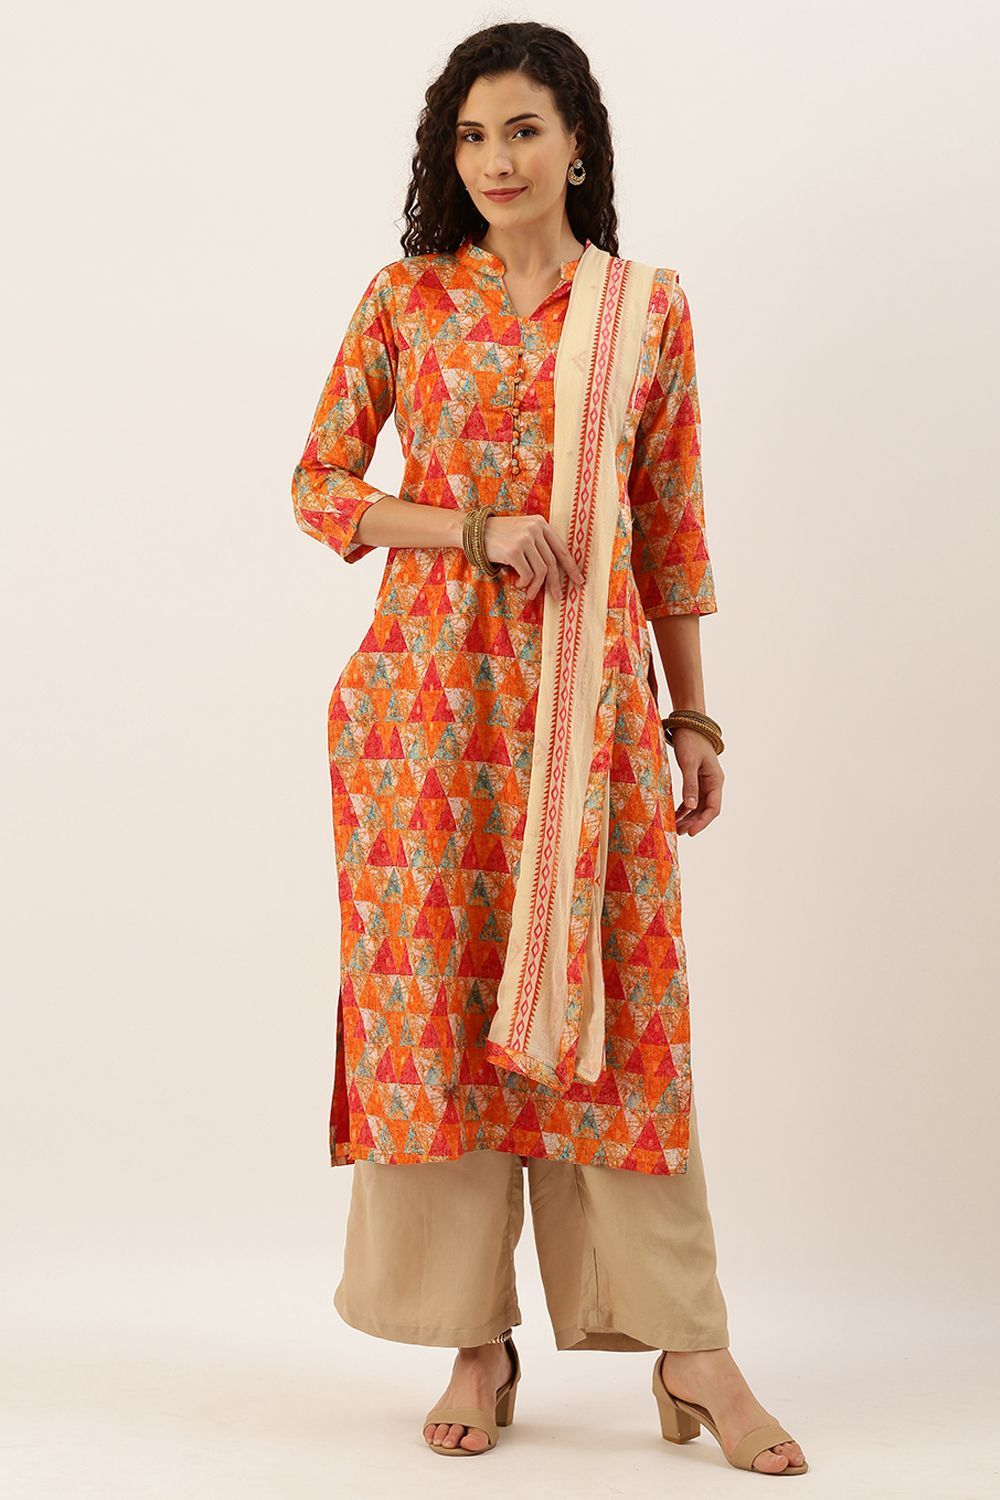 Buy Orange Cotton Salwar Kameez (NWS-5847) Online